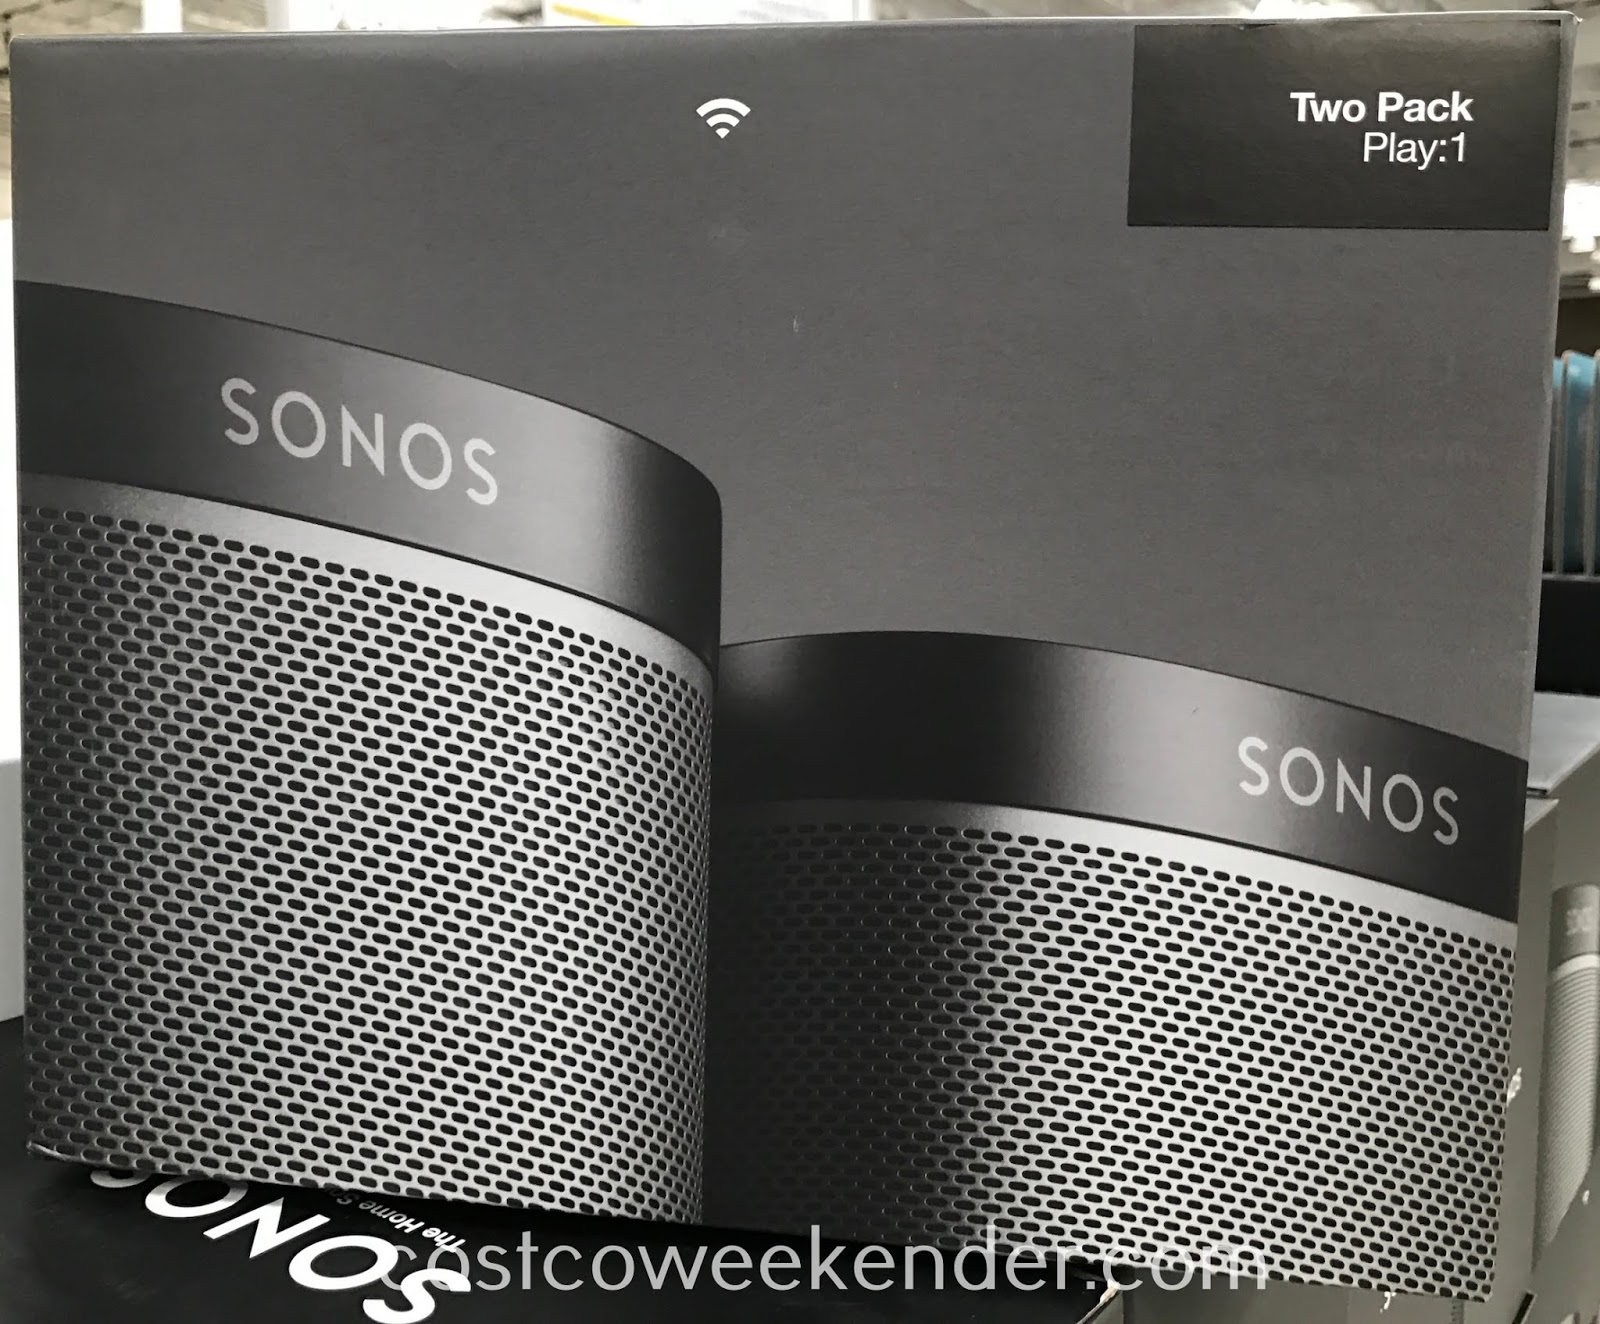 Sonos Wifi | Costco Weekender